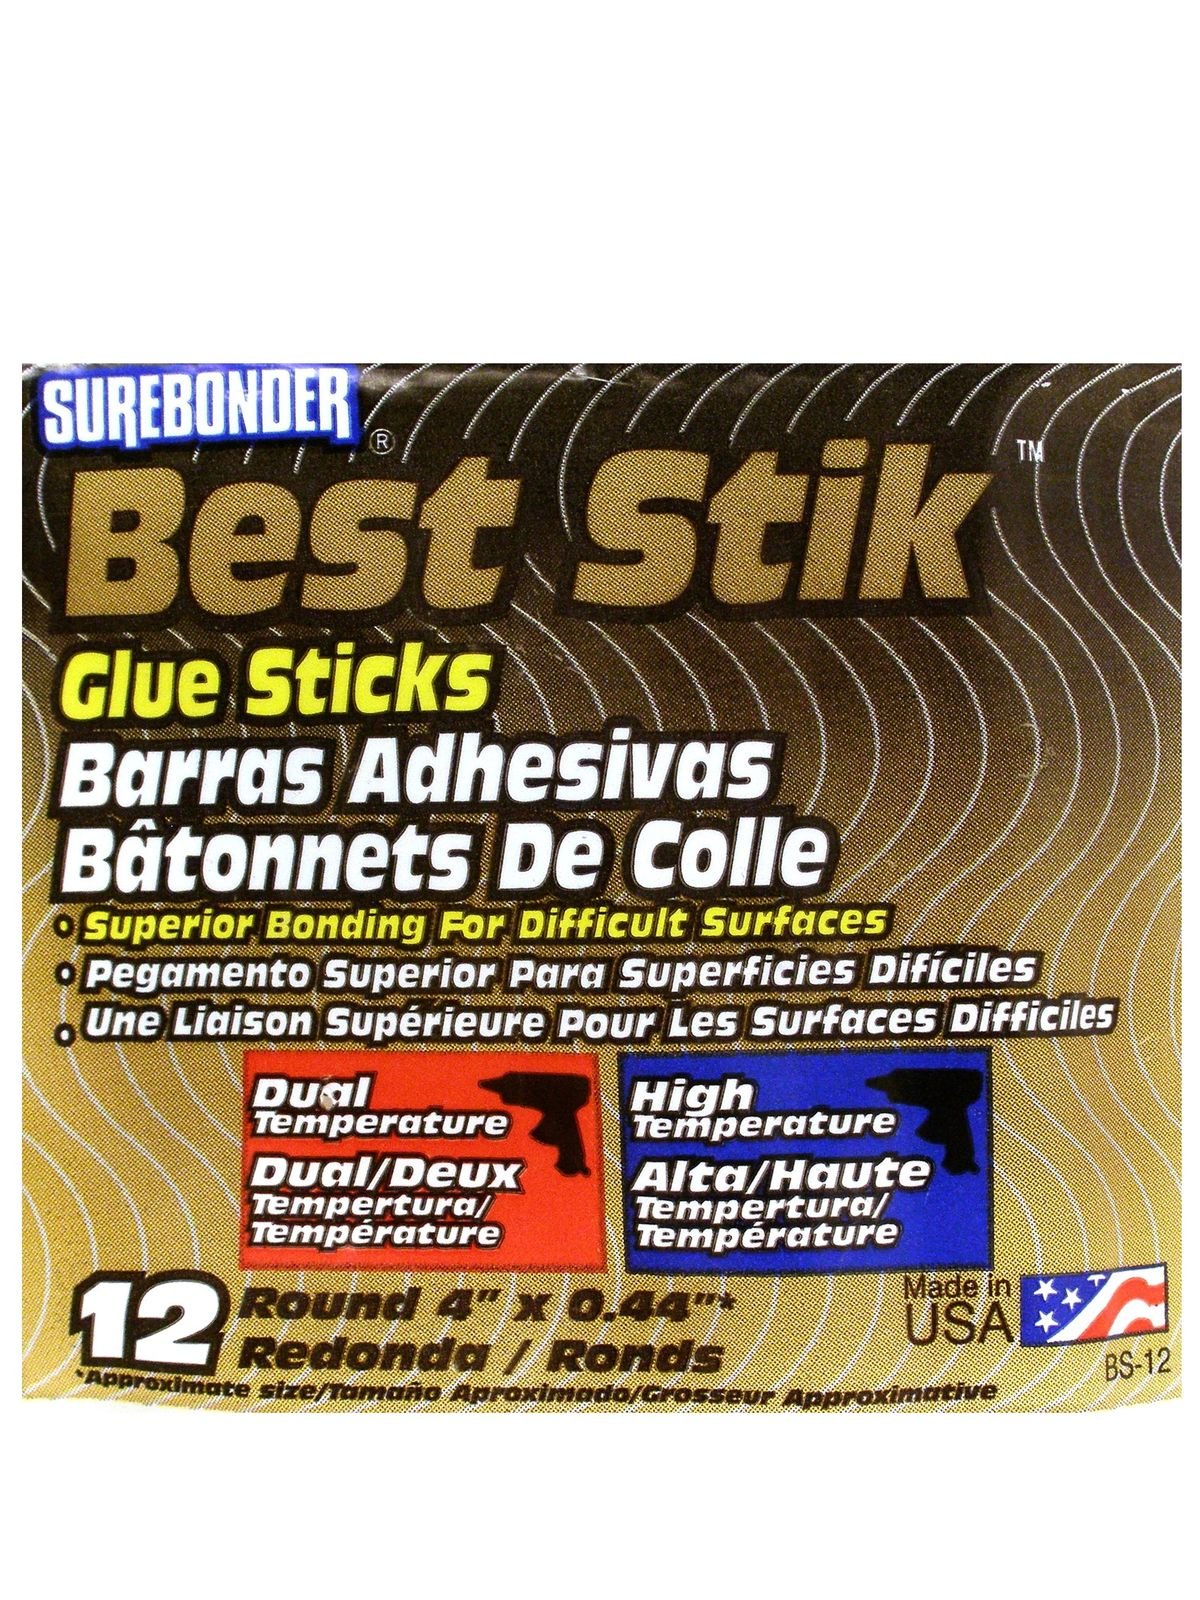 Surebonder - Best Stik Glue Sticks